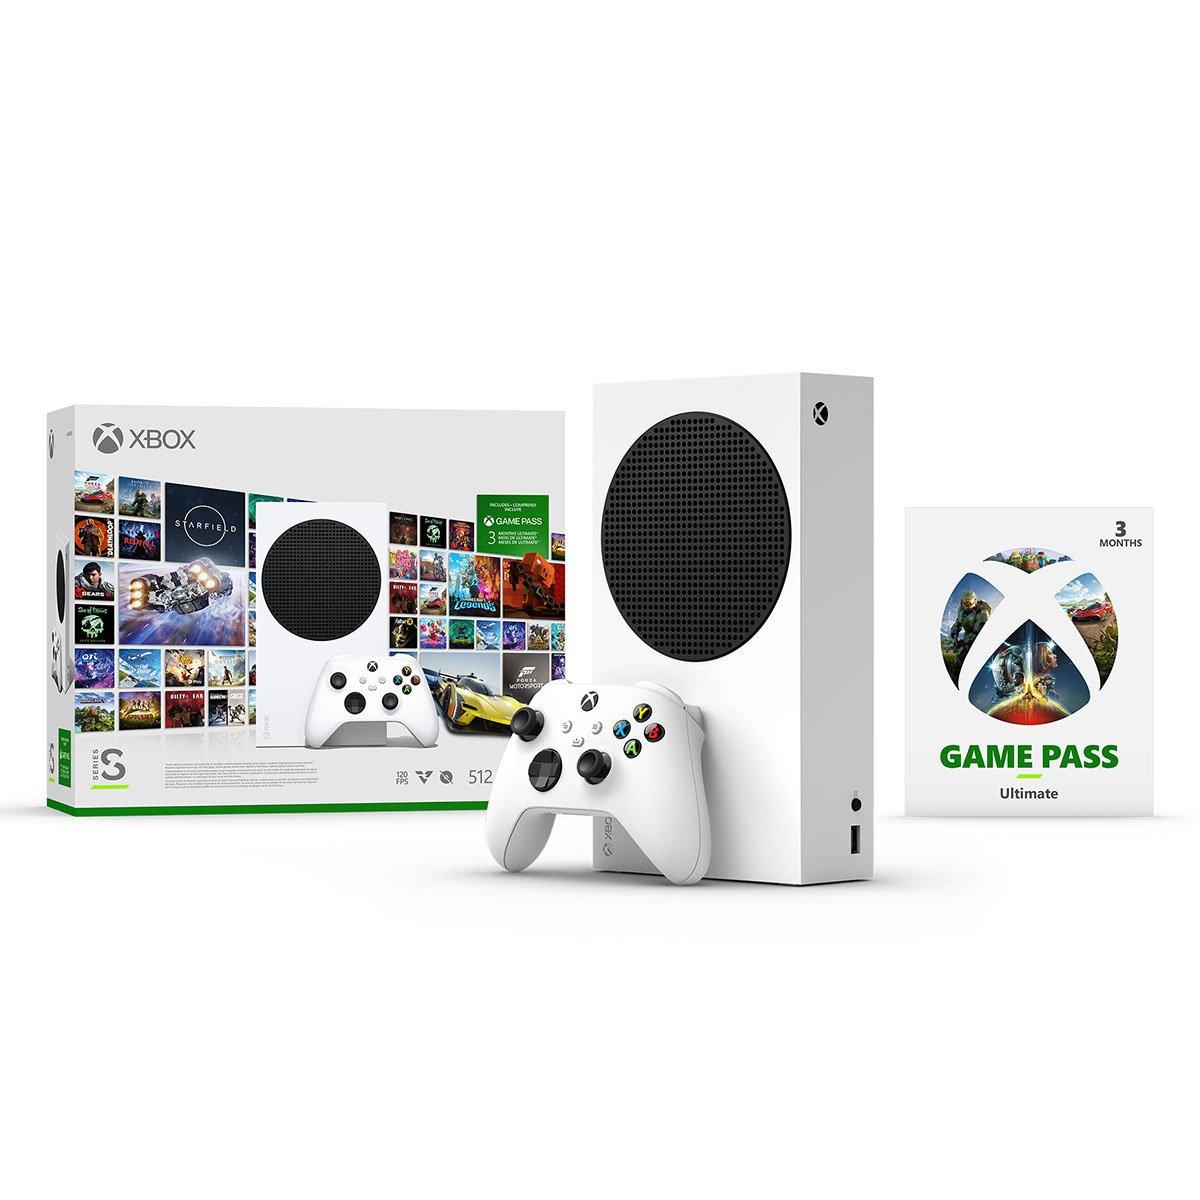 Microsoft Secretly Devalued Xbox Game Pass Conversions